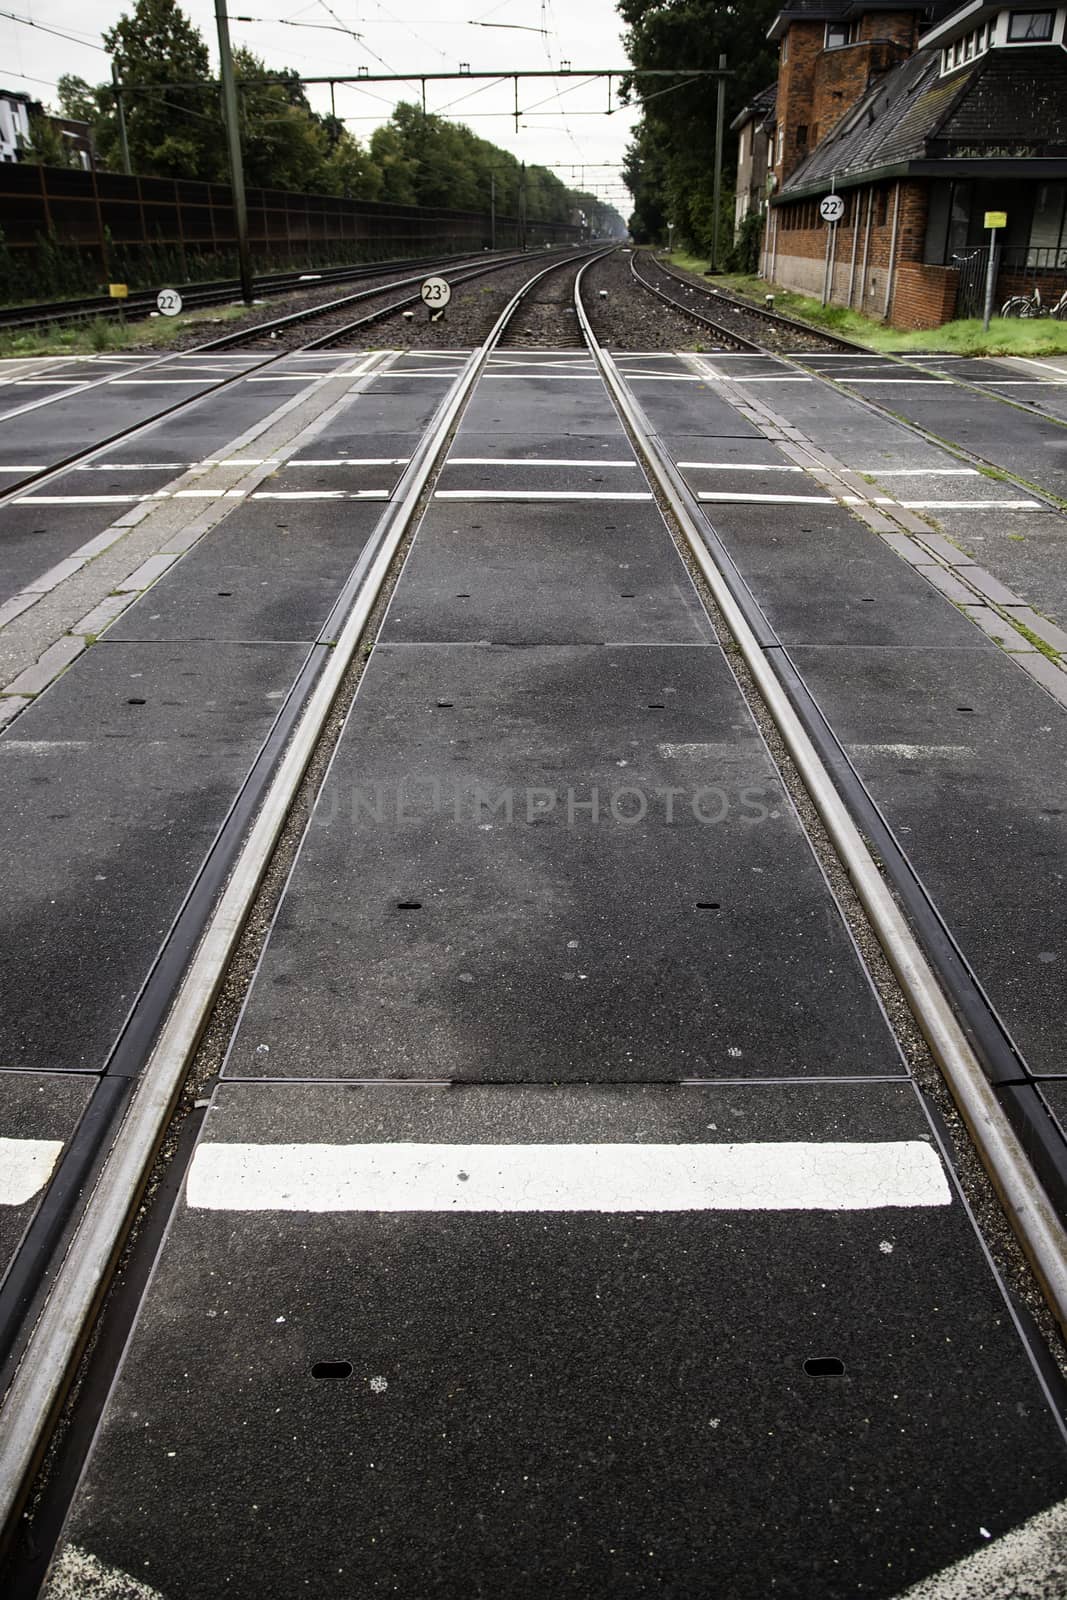 Train tracks in a station by esebene